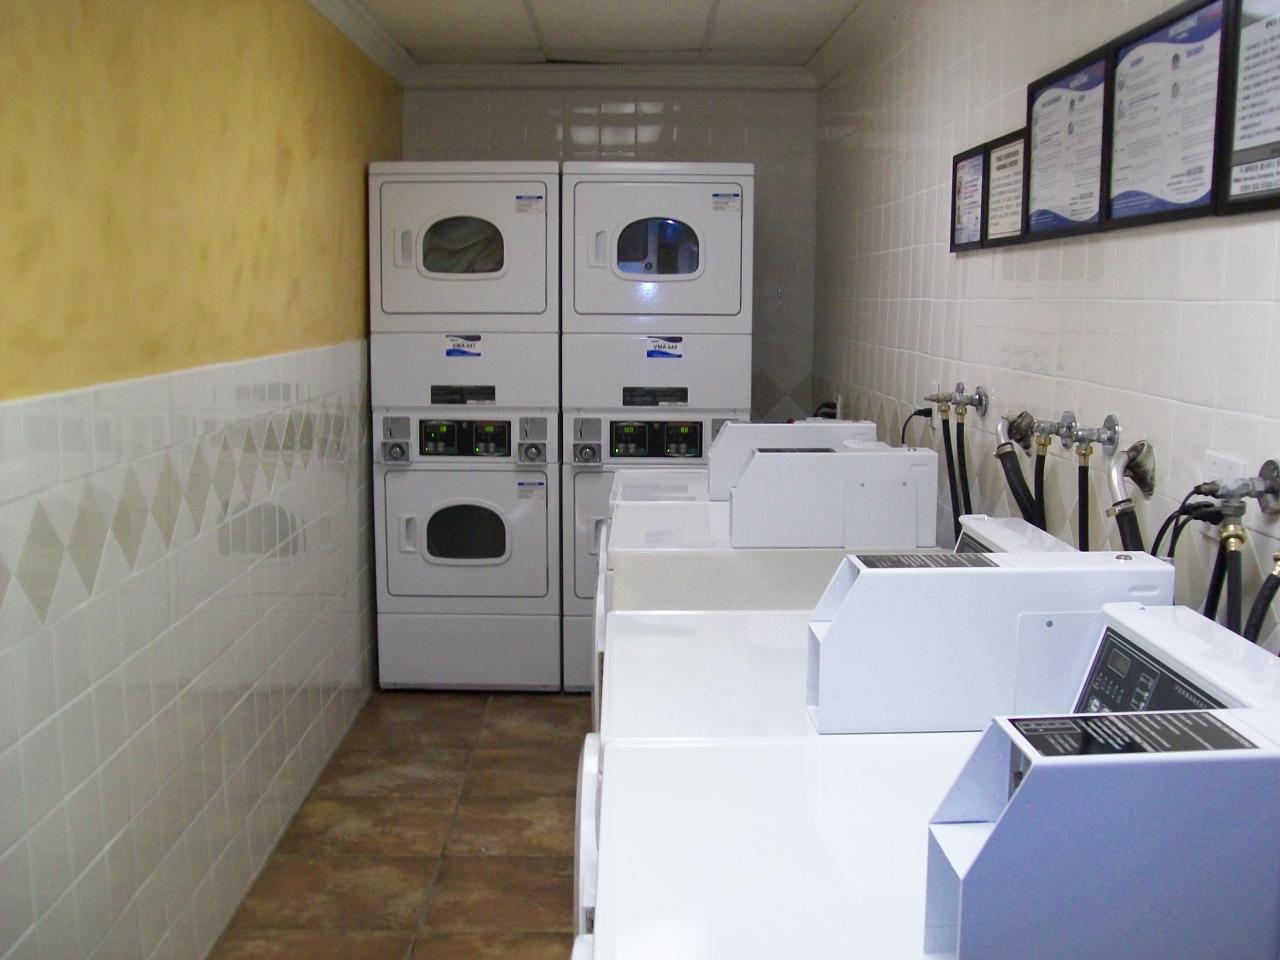 Photo of Kingsbury Villas Apartments - Laundry Facilities